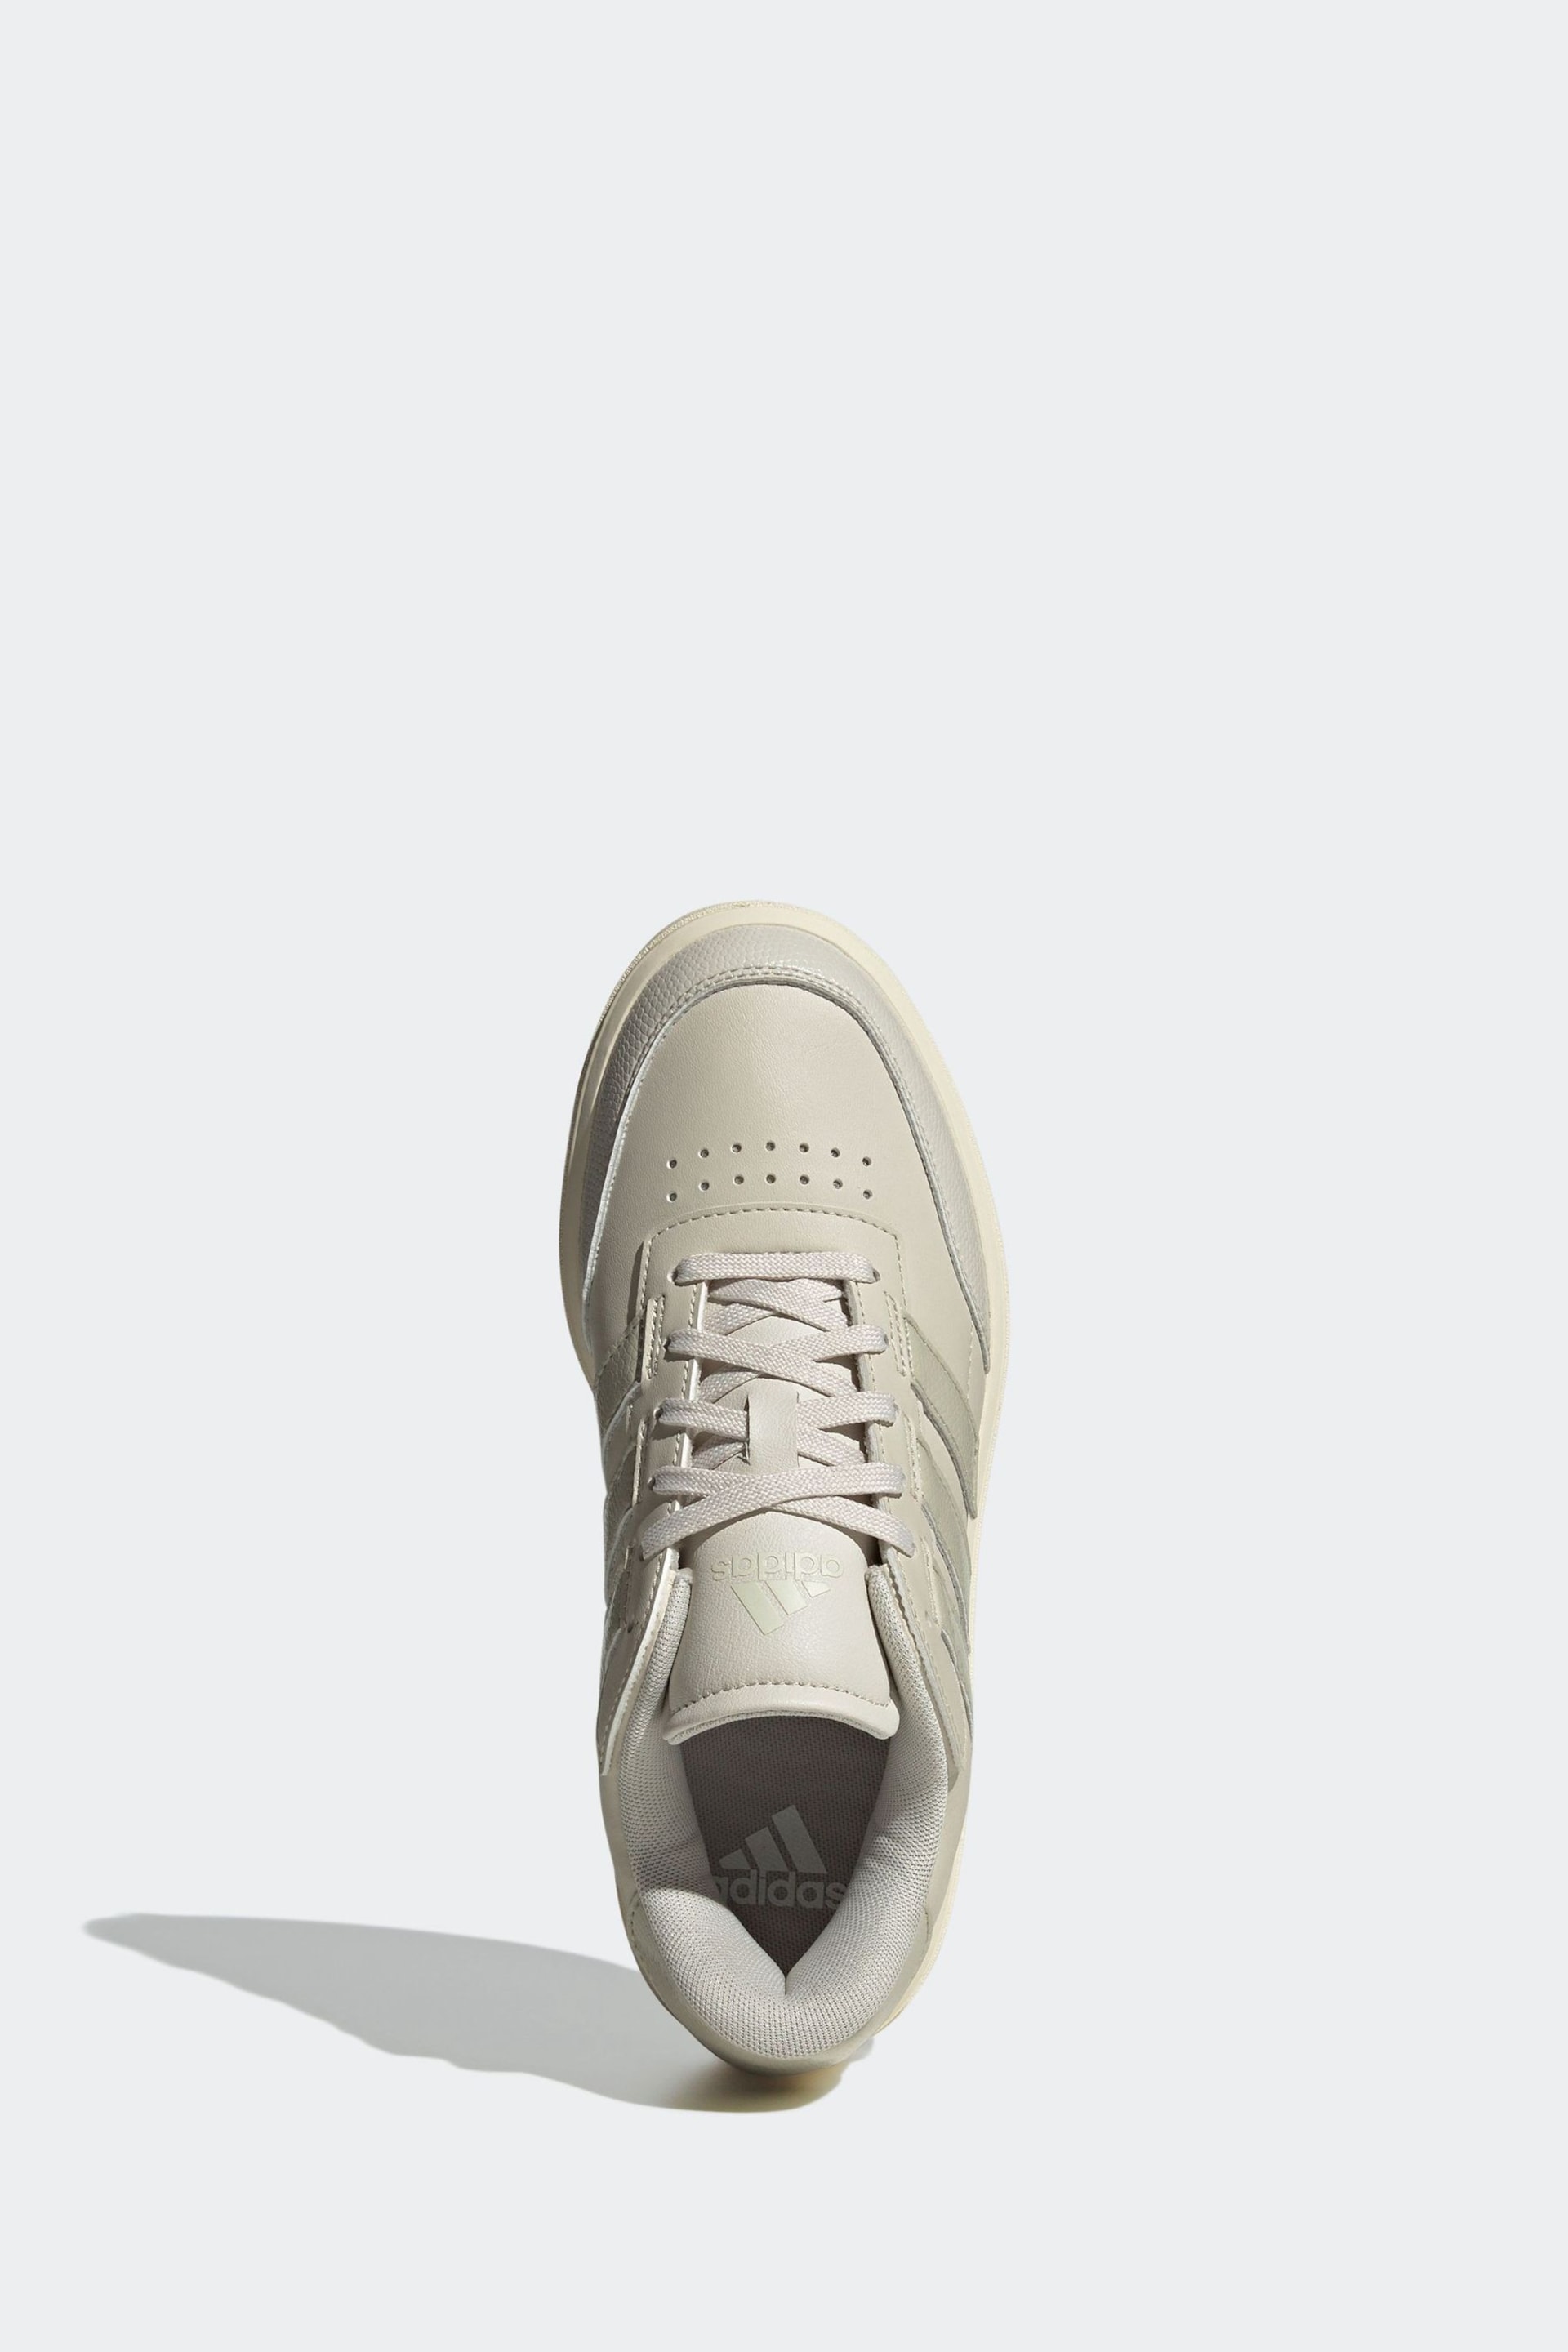 adidas Grey/Ecru Sportswear Courtblock Trainers - Image 4 of 6